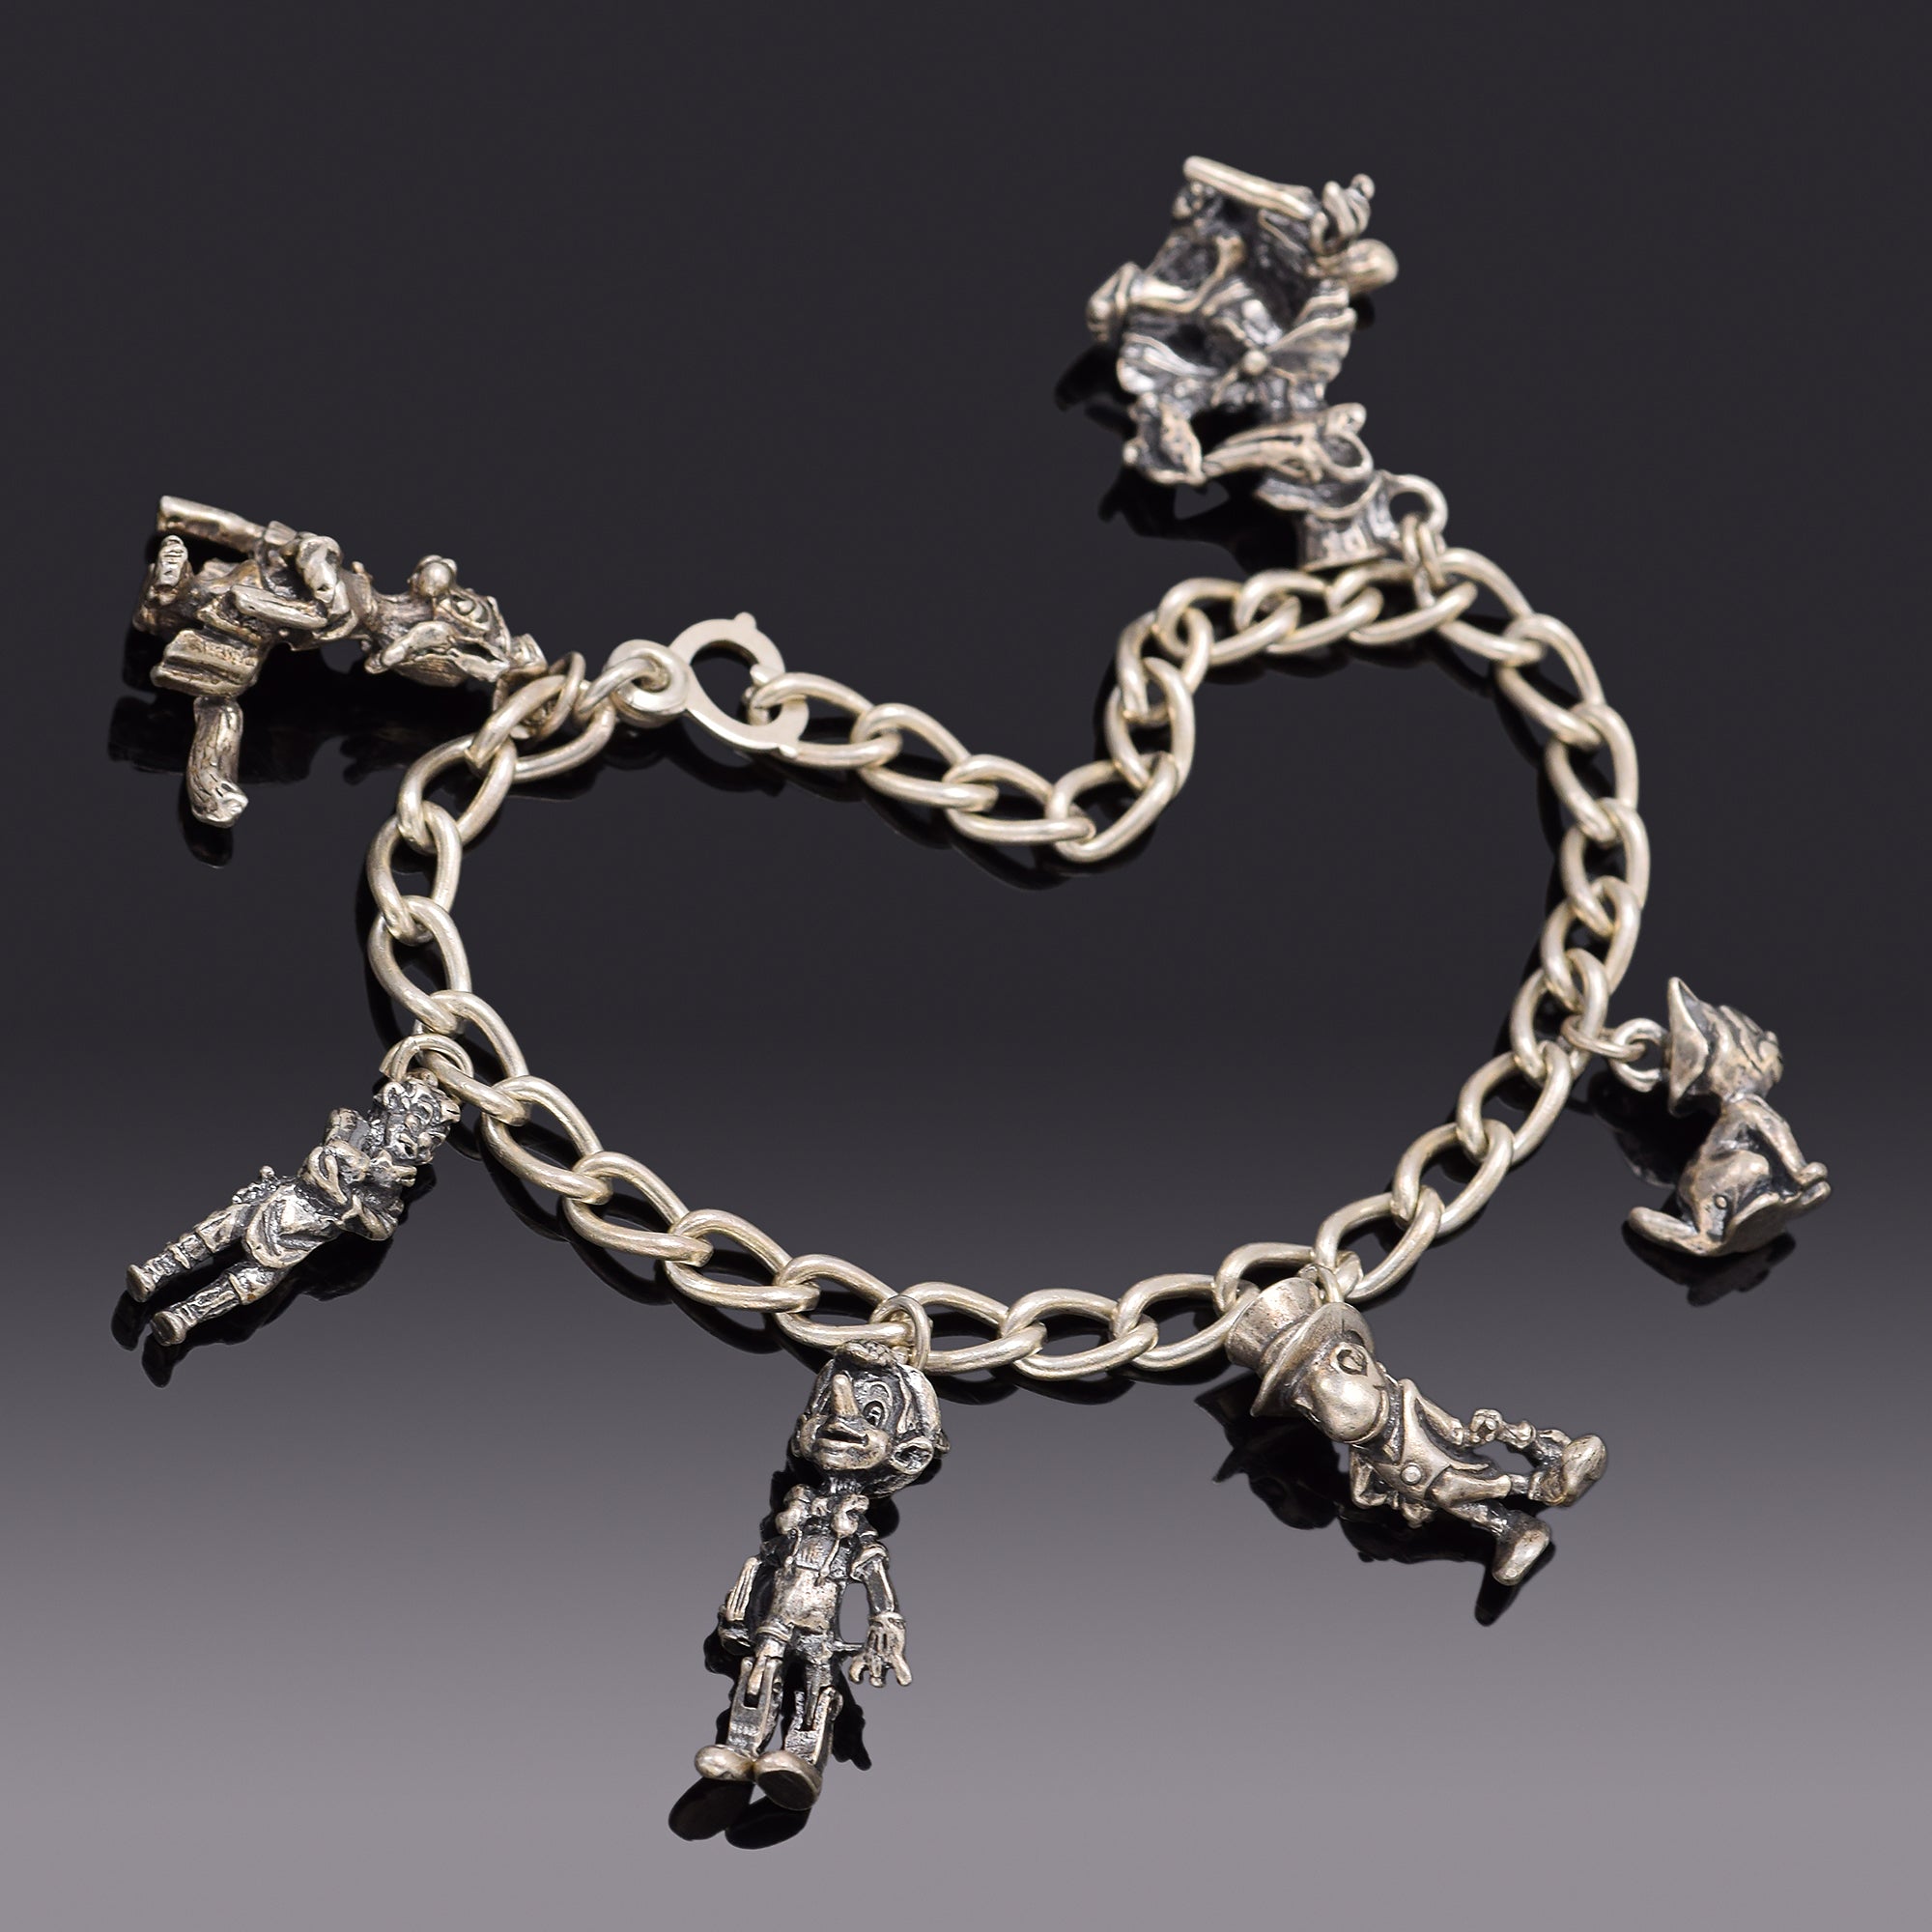 Vintage Sterling Silver Charm Bracelet & Charms, Disney, Dice, Heavy,  Articulate